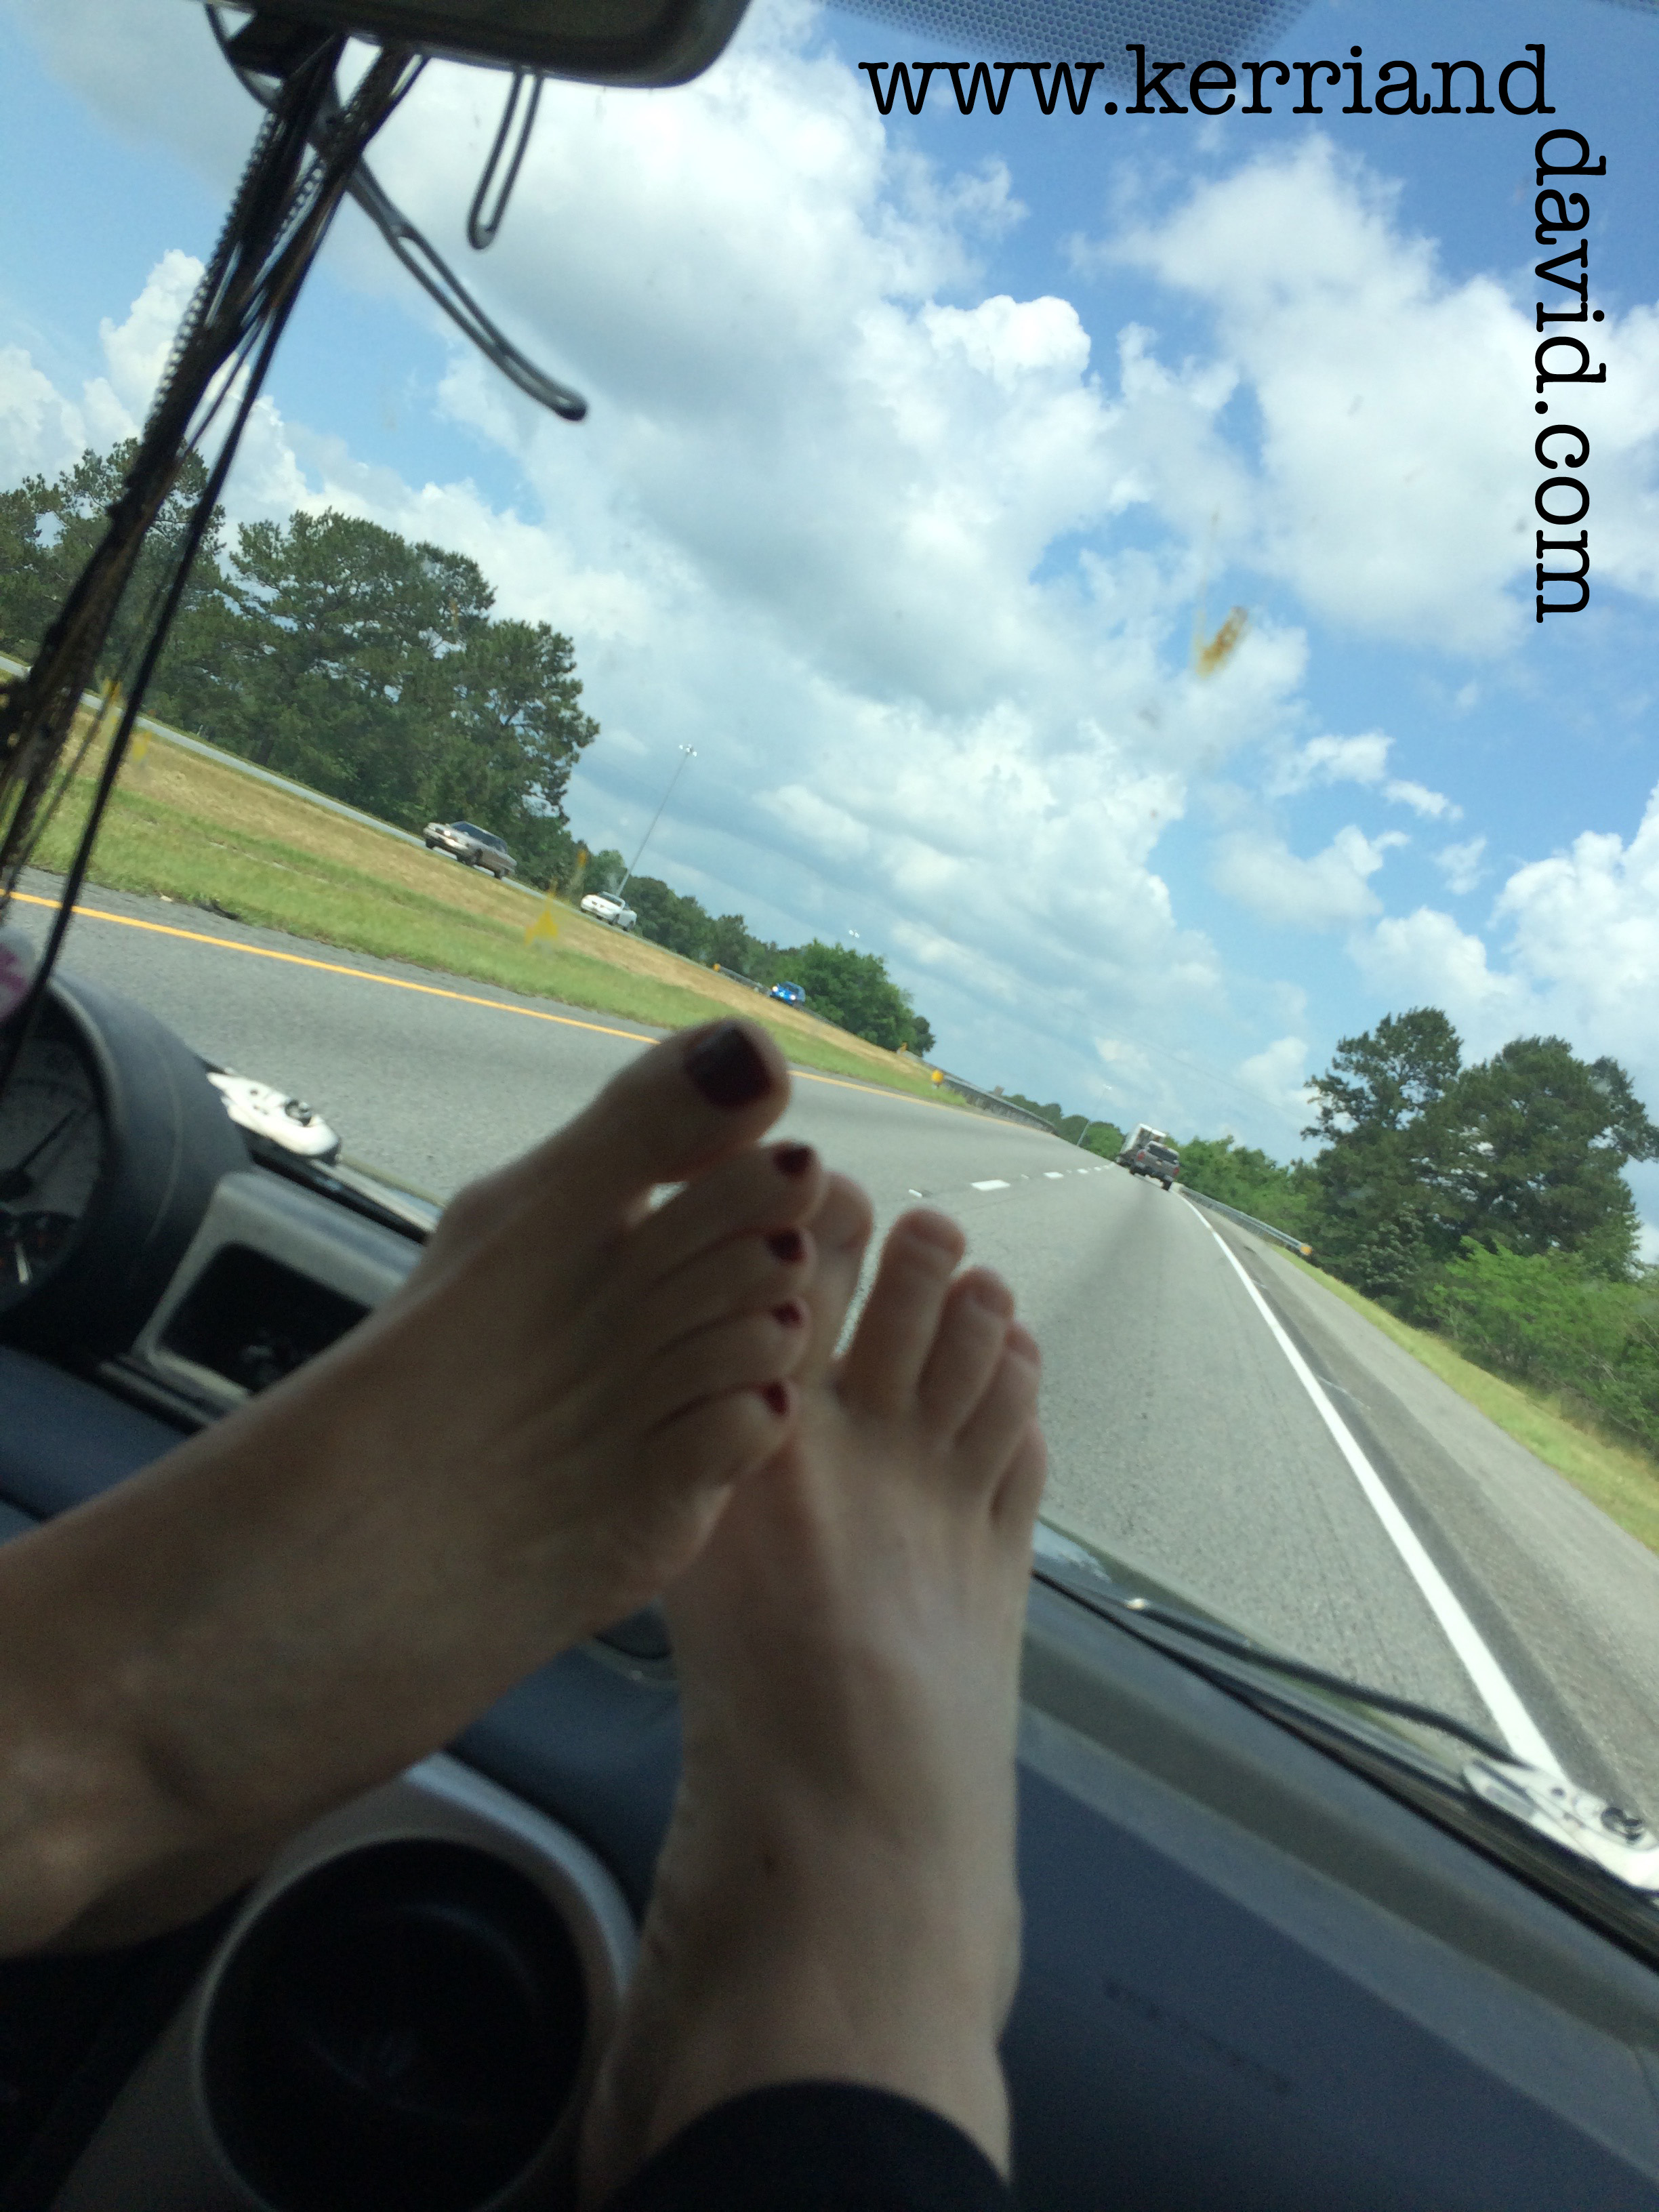 feet on dashboard website box